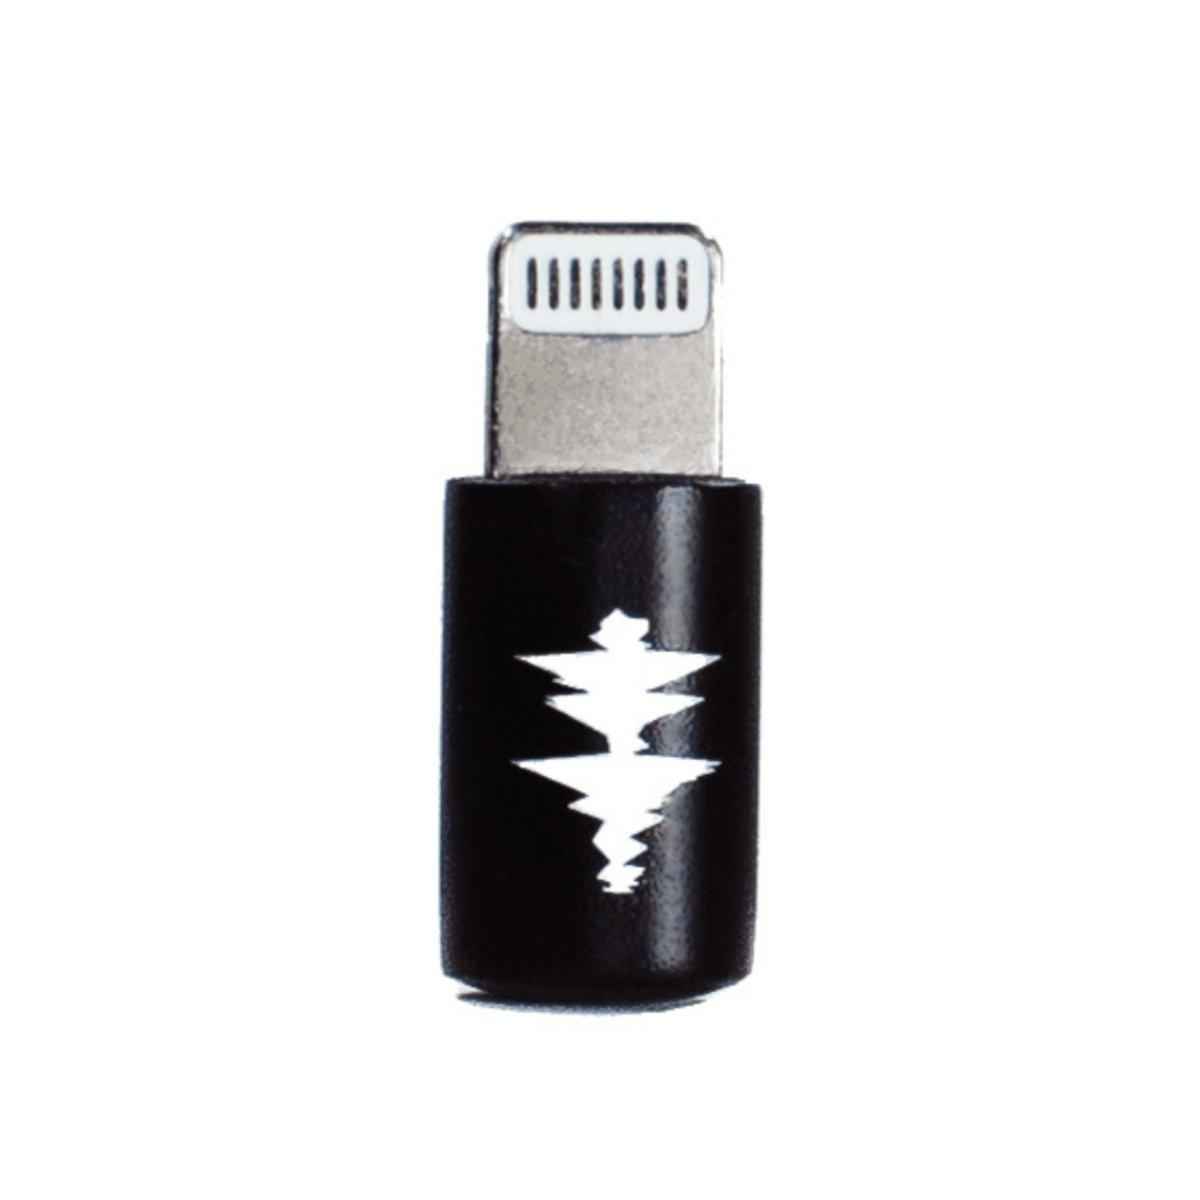 Mic-Lock Mini Lightning Single-Ended Microphone Blocker - Black - Mic-Lock